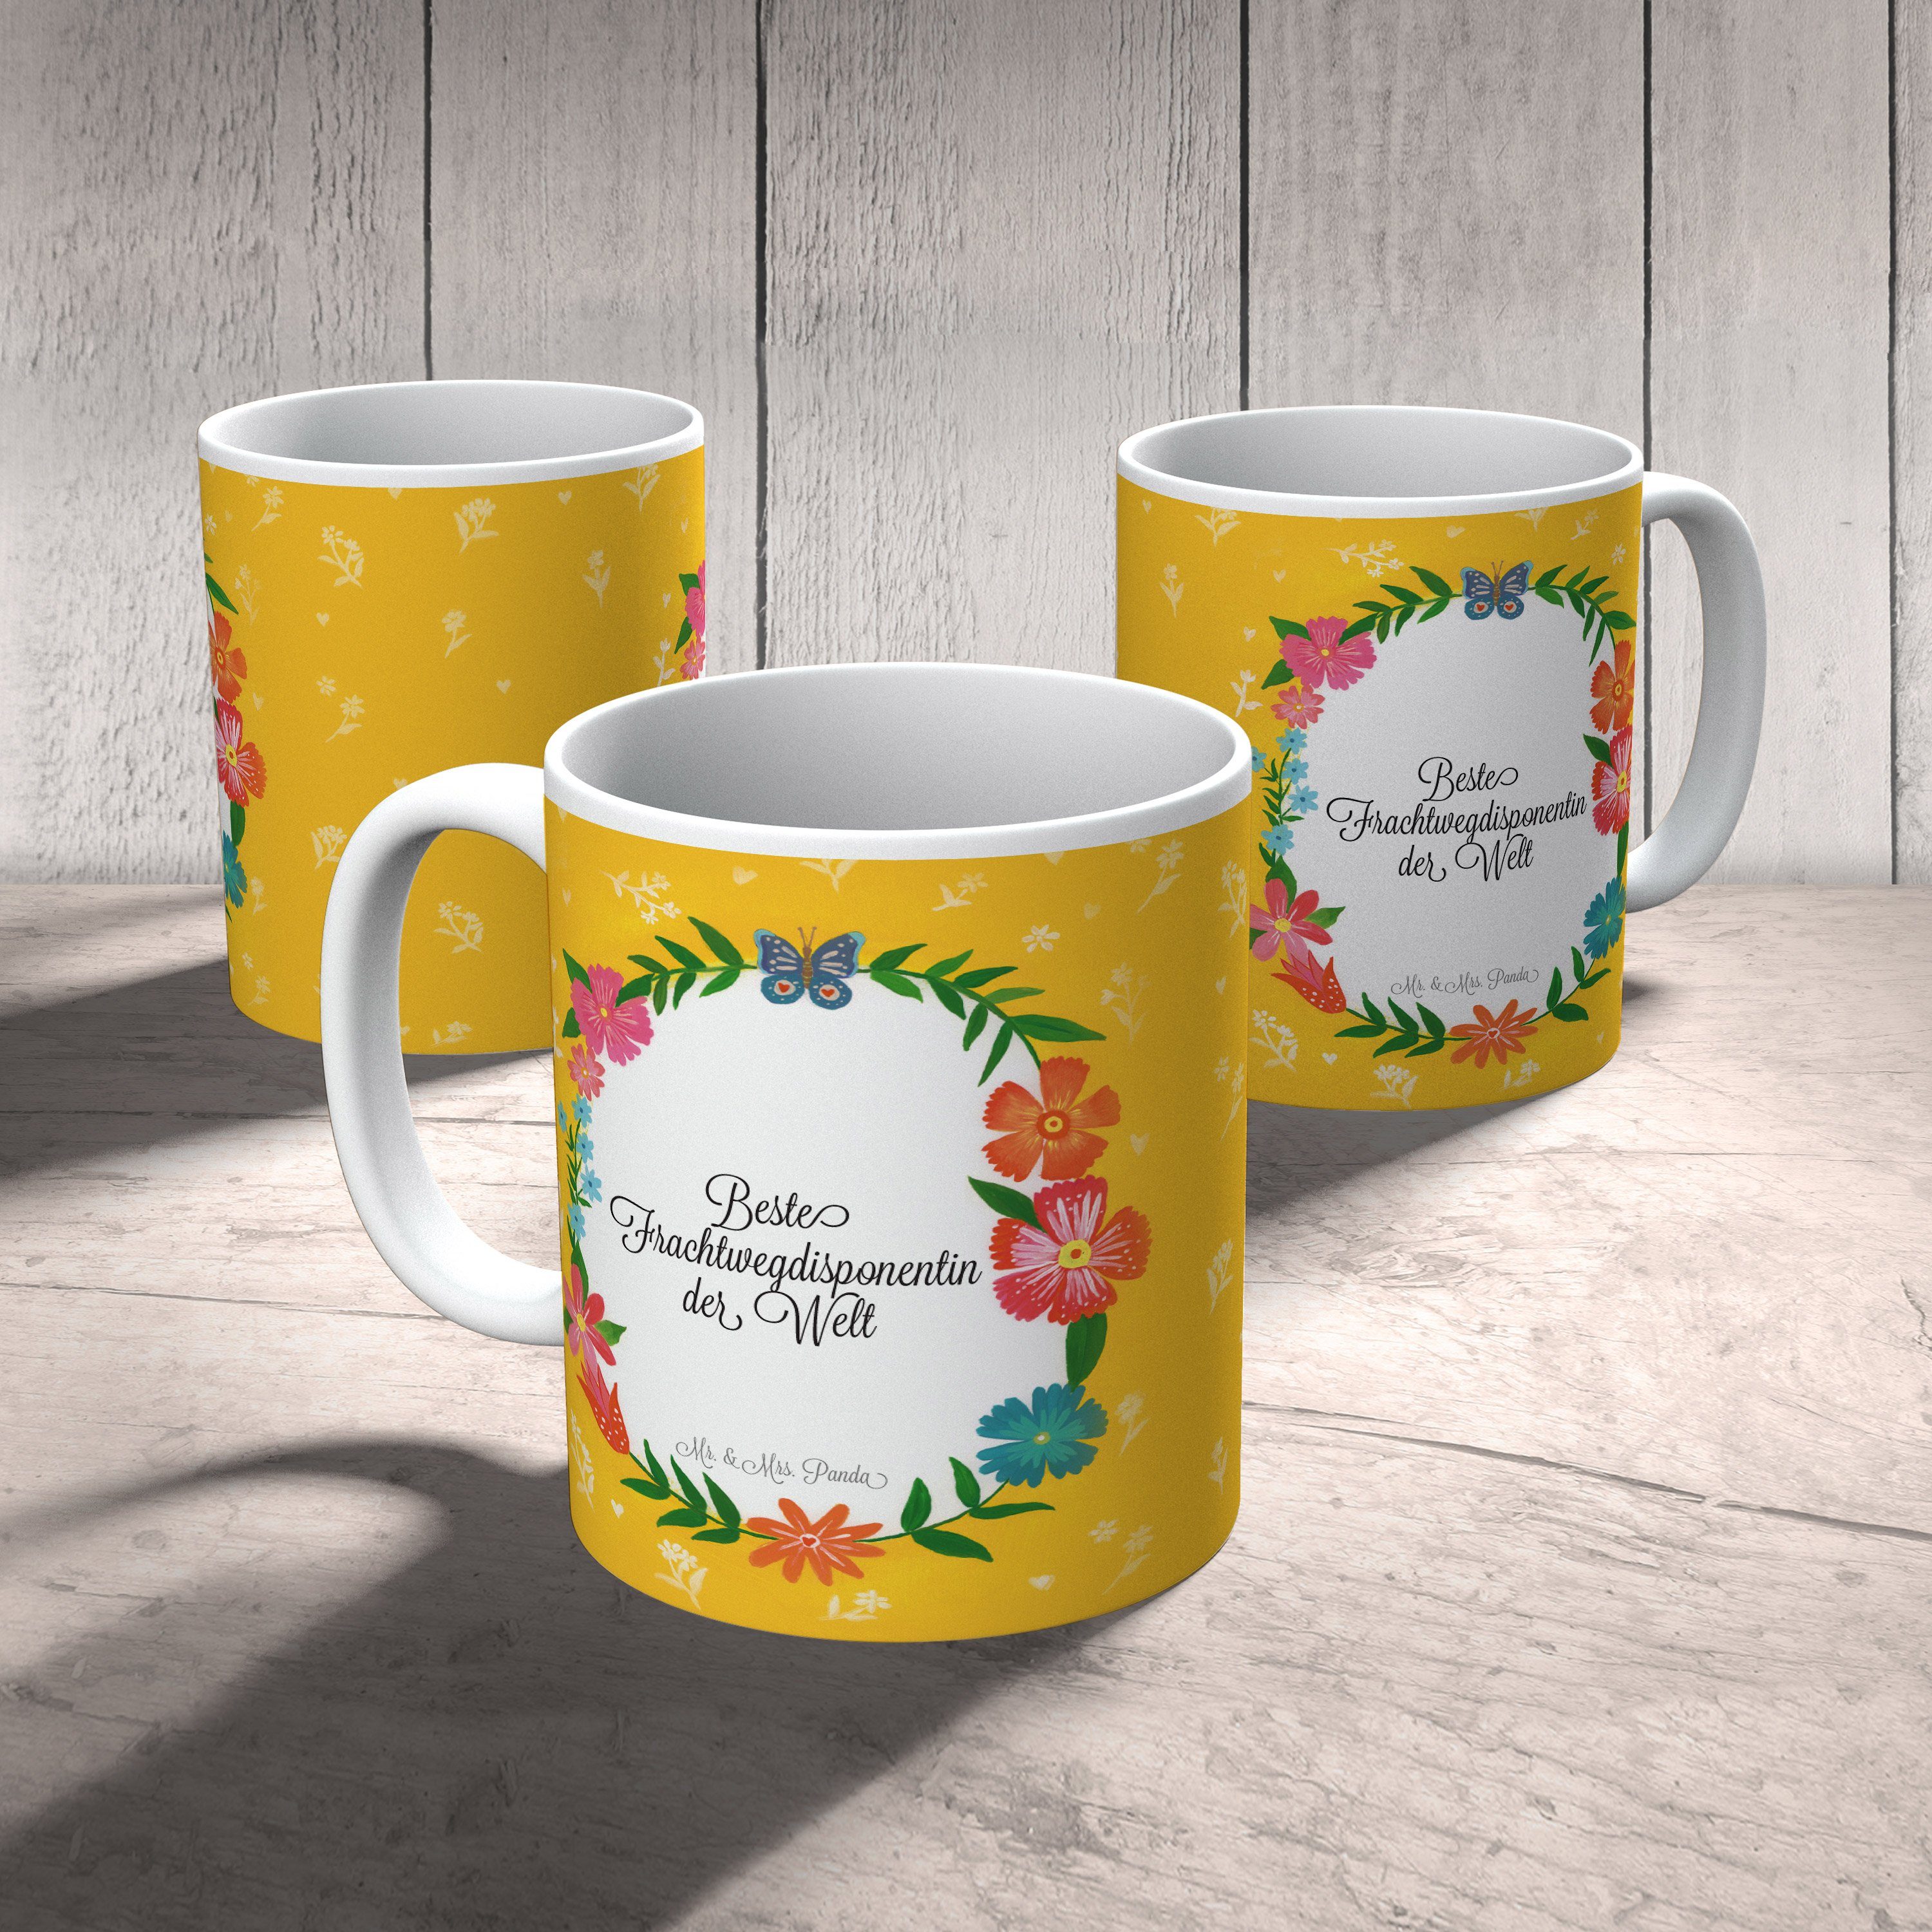 Mr. & Mrs. Panda Abschluss, Motive, Kaffeetasse, - Frachtwegdisponentin Keramik Tasse Tasse Geschenk